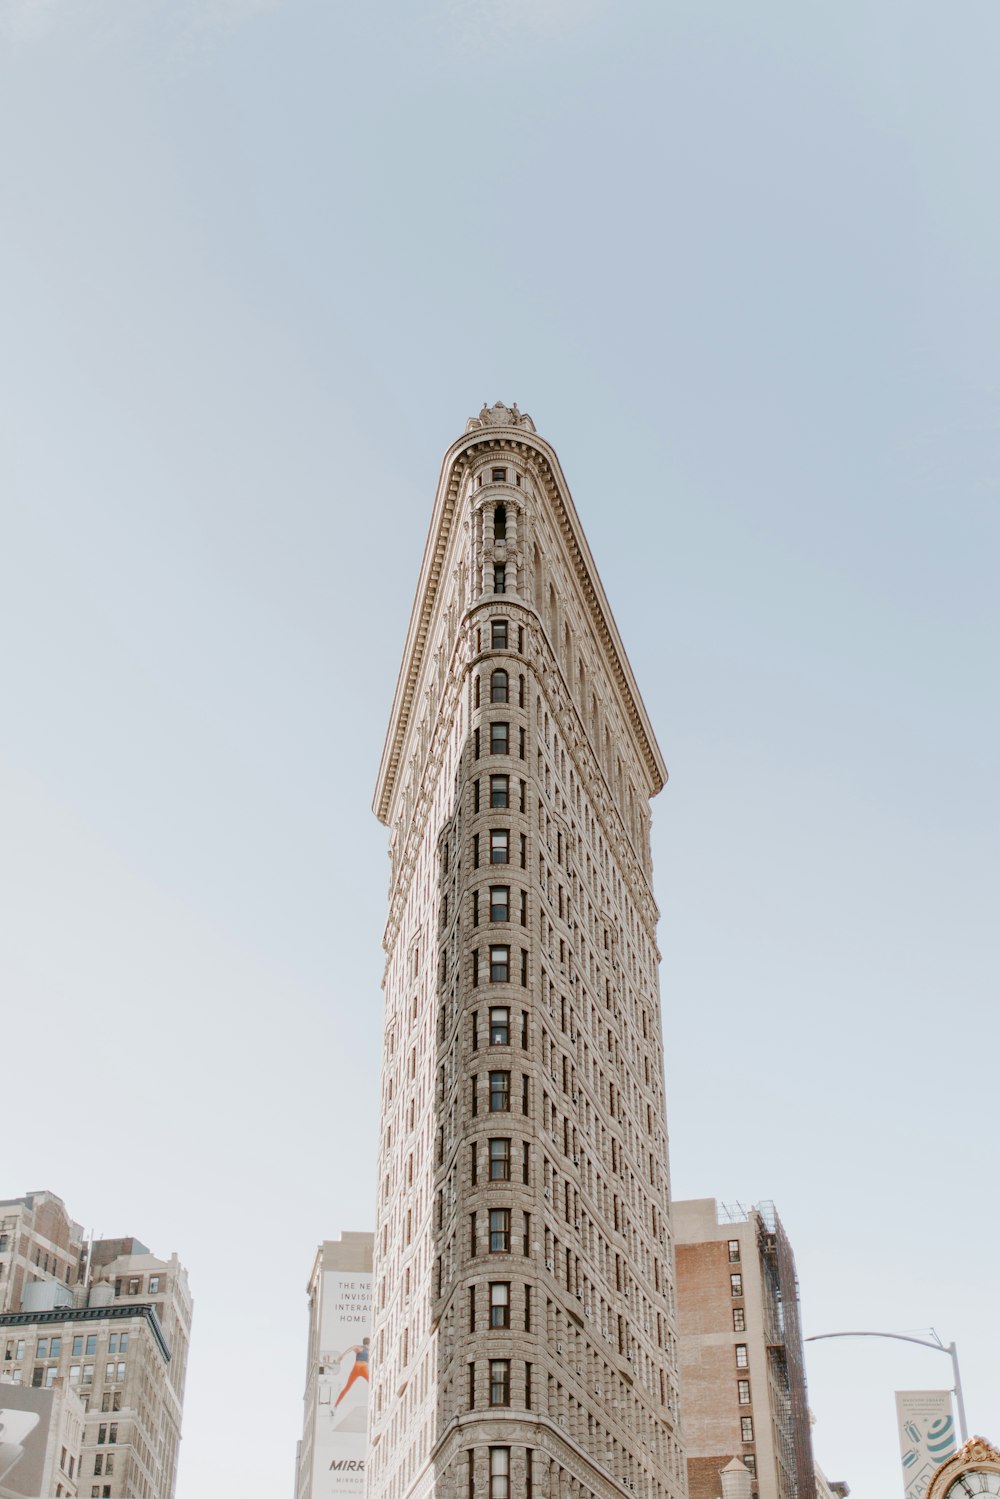 Flat Iron building, New York